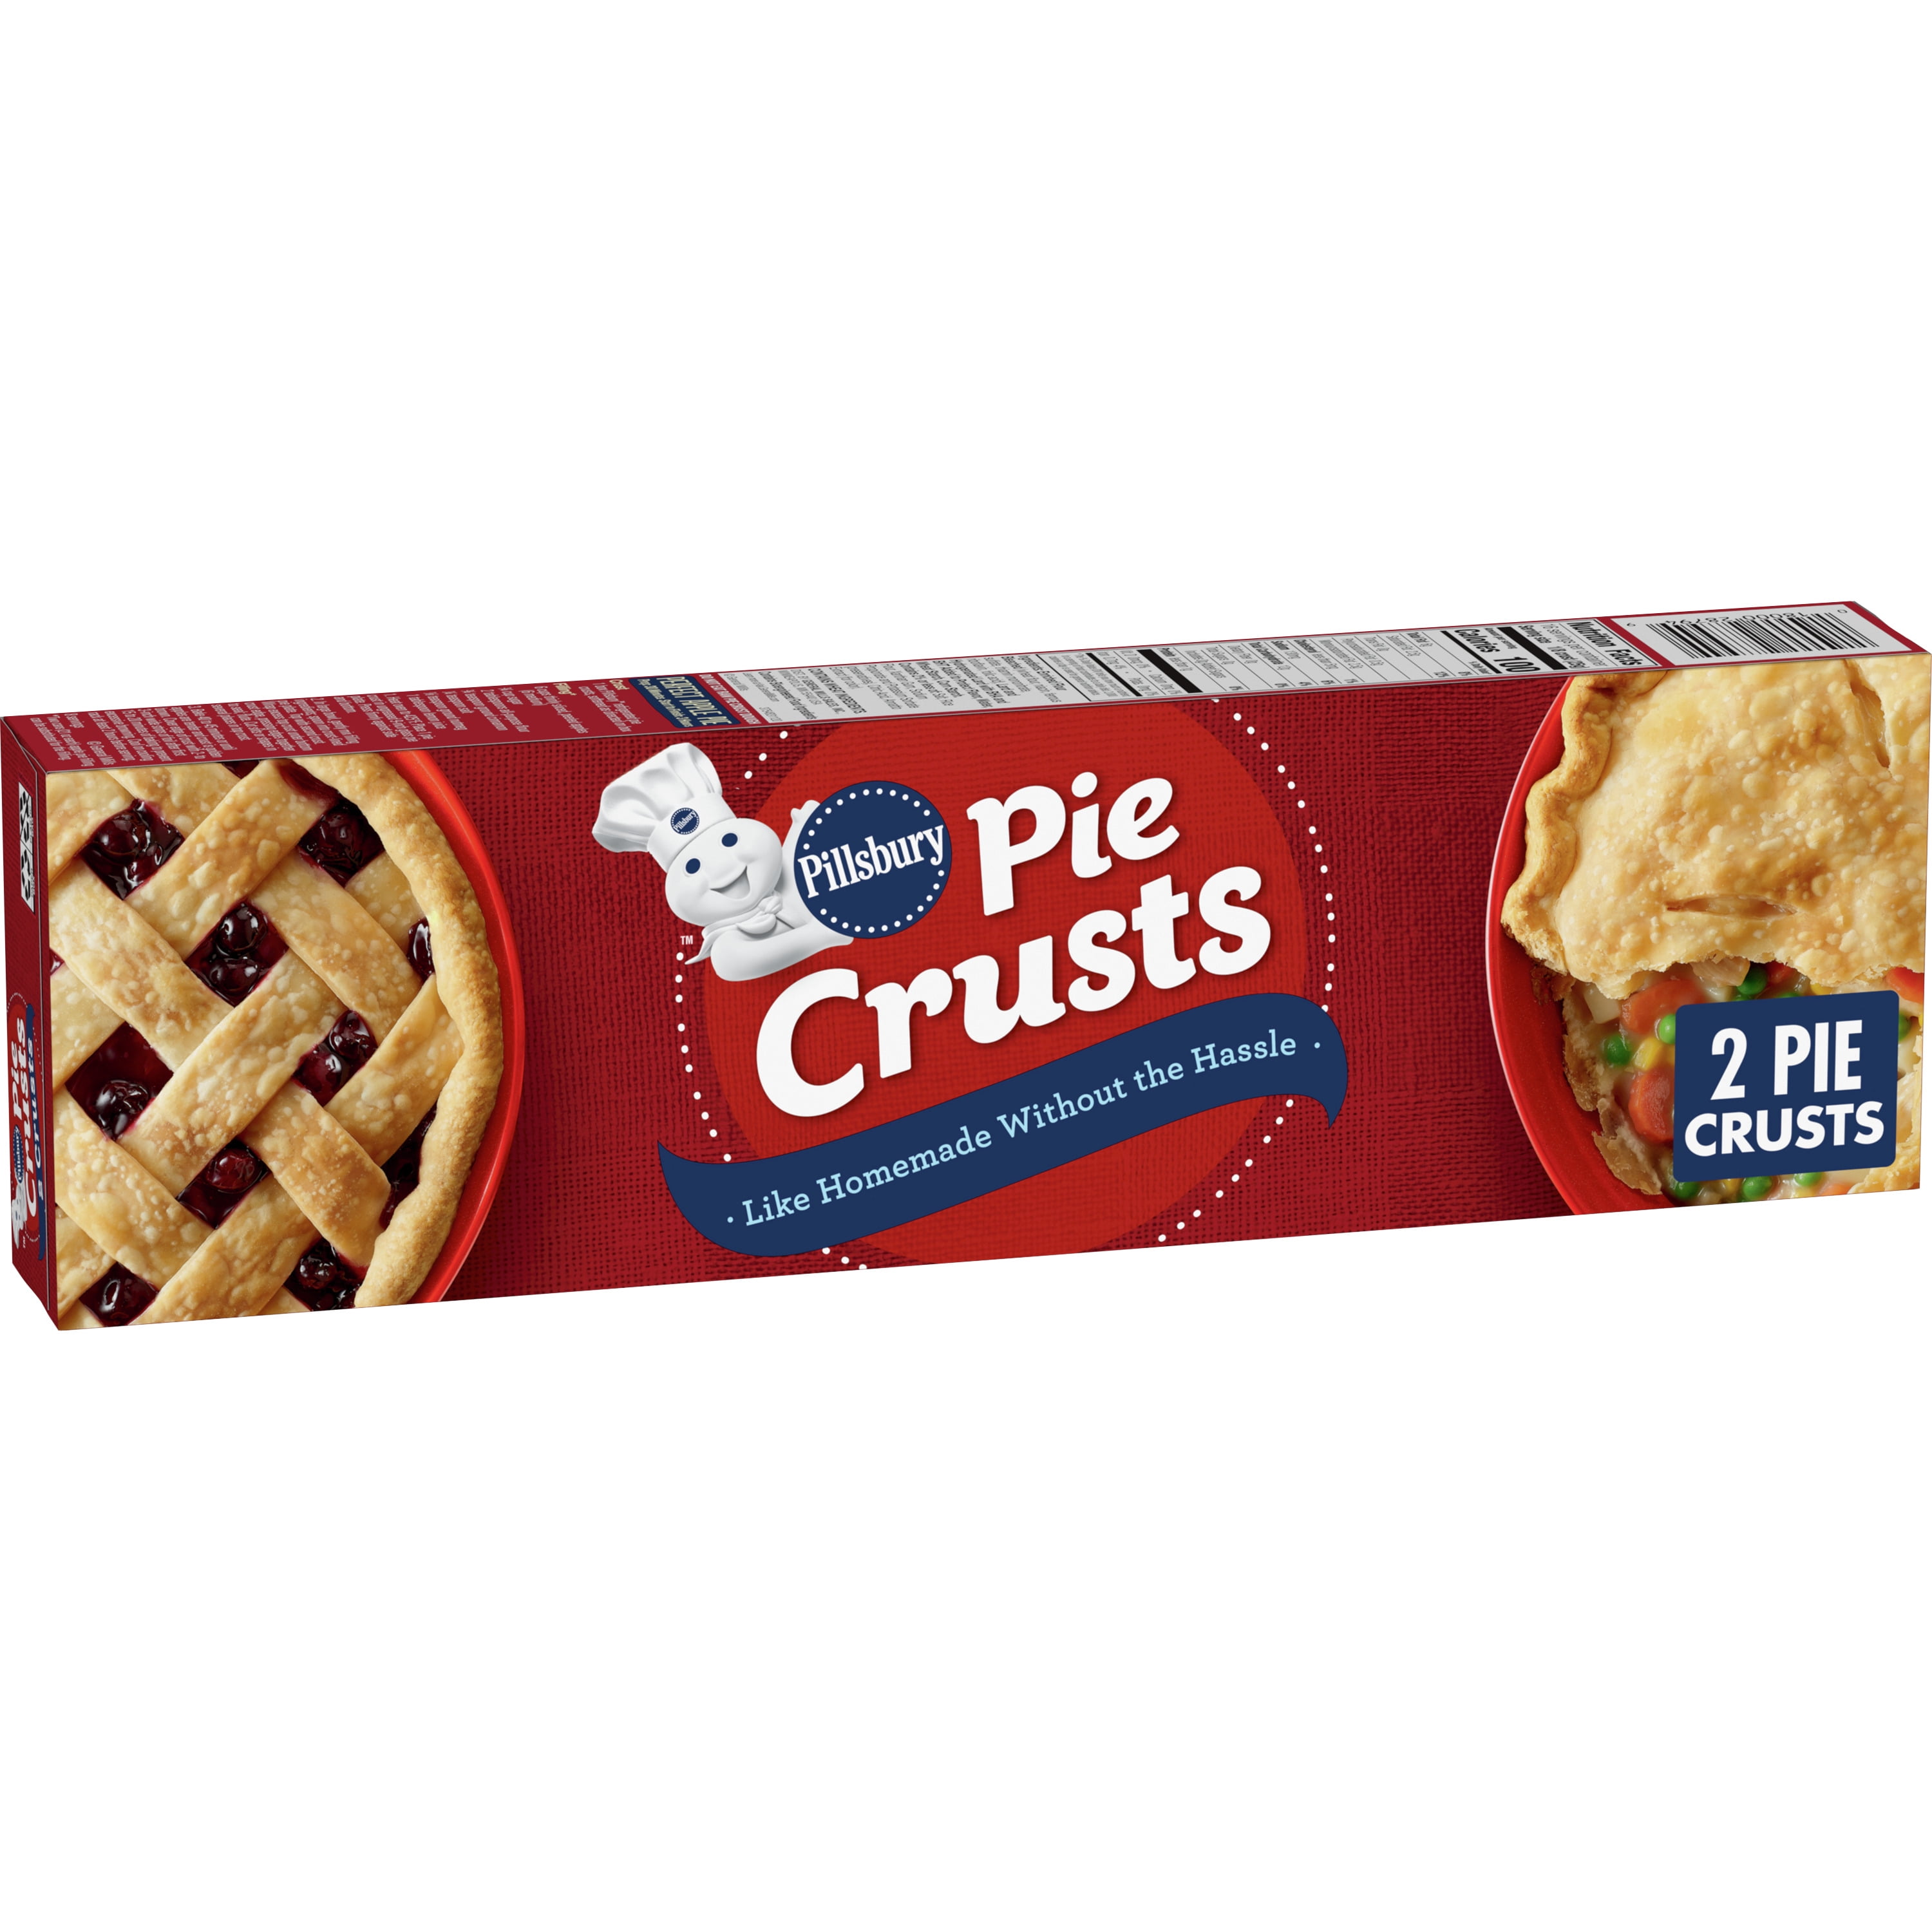 Pillsbury Premade Refrigerated Pie Crust Two Pie Crusts 14 1 Oz 2681951a 97e5 45ec 8833 115a386f0428.6f2894b679068bd126e0e6747d2b3fa3 